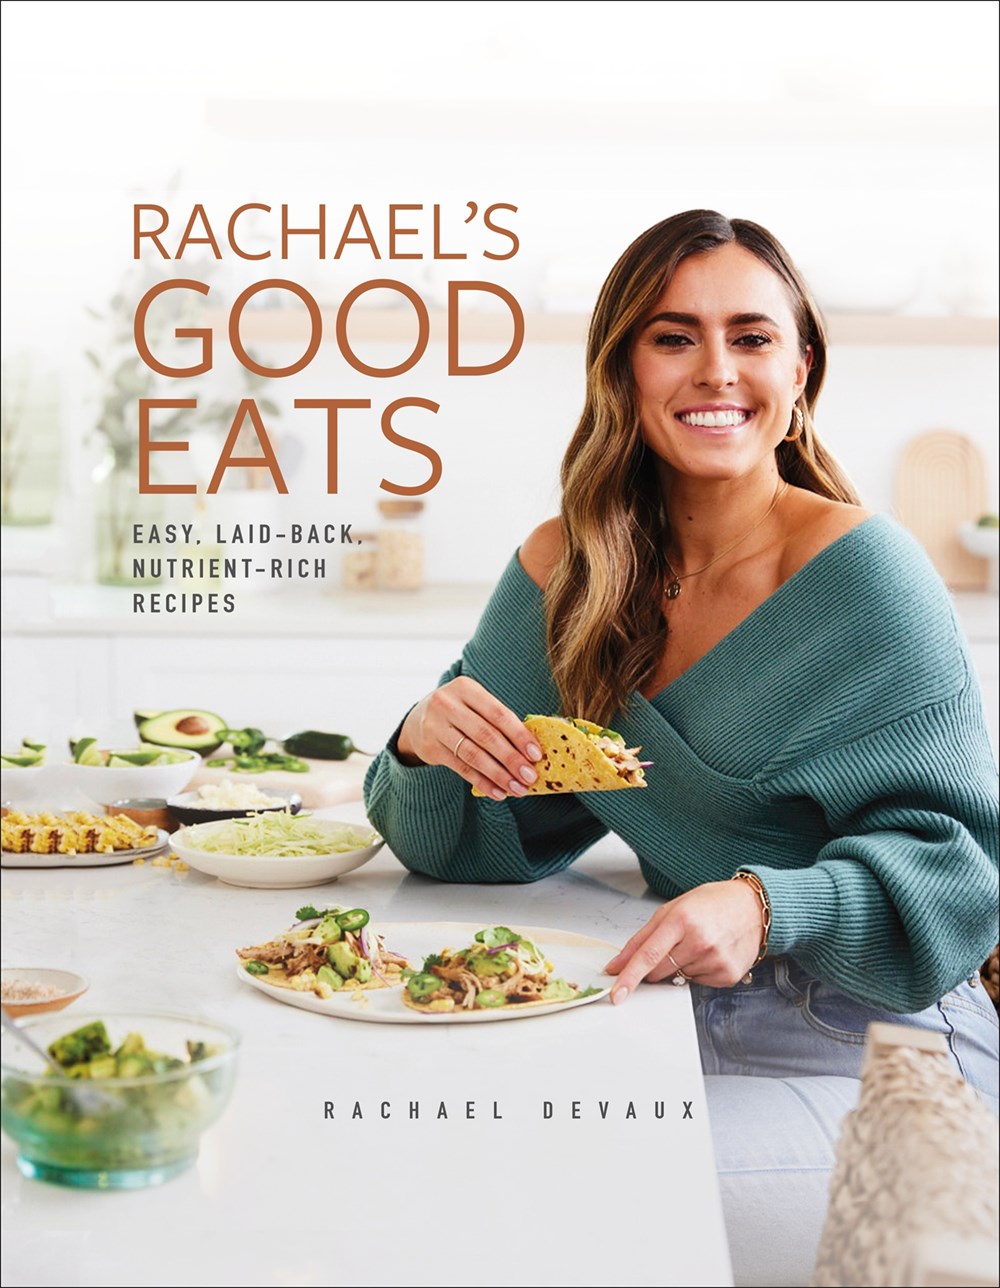 Rachael’s Good Eats: Easy, Laid-Back, Nutrient-Rich Recipes